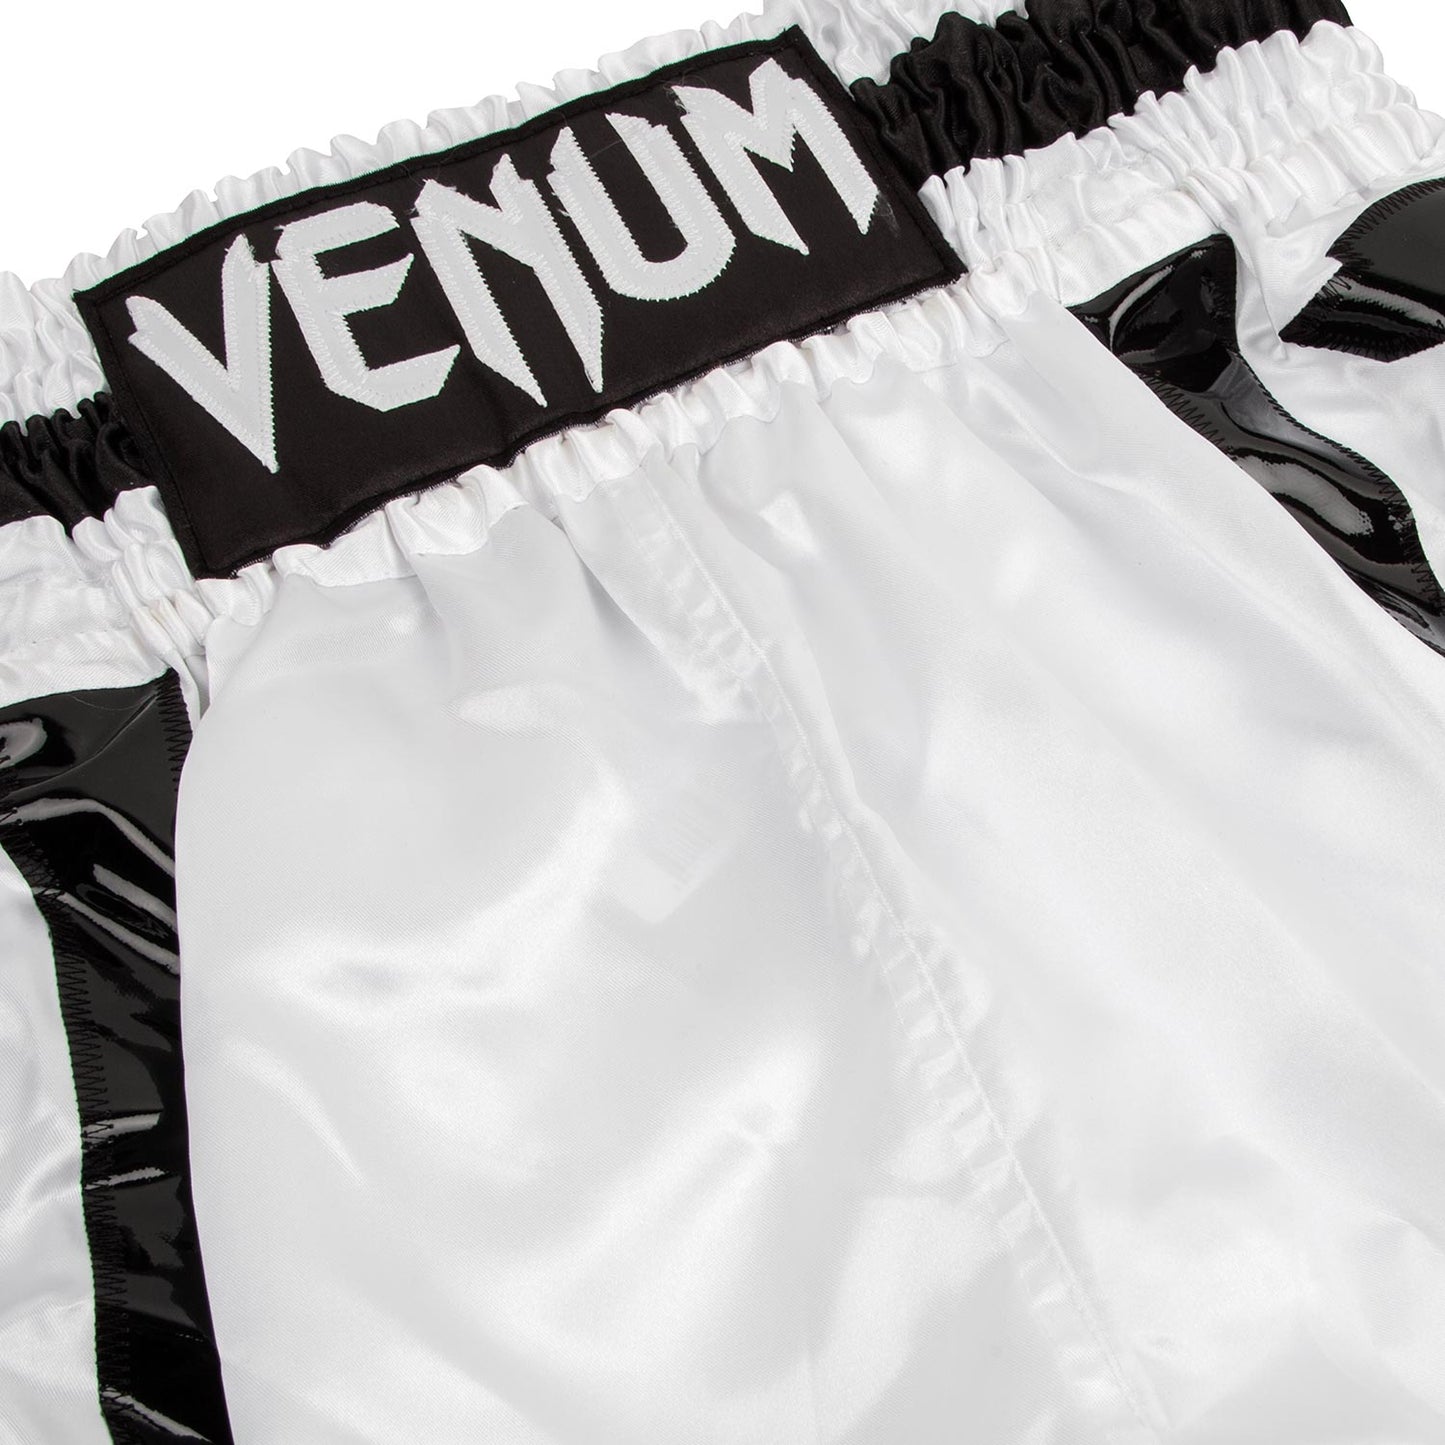 Pantalones de Boxeo Venum Elite - Blanco/Negro